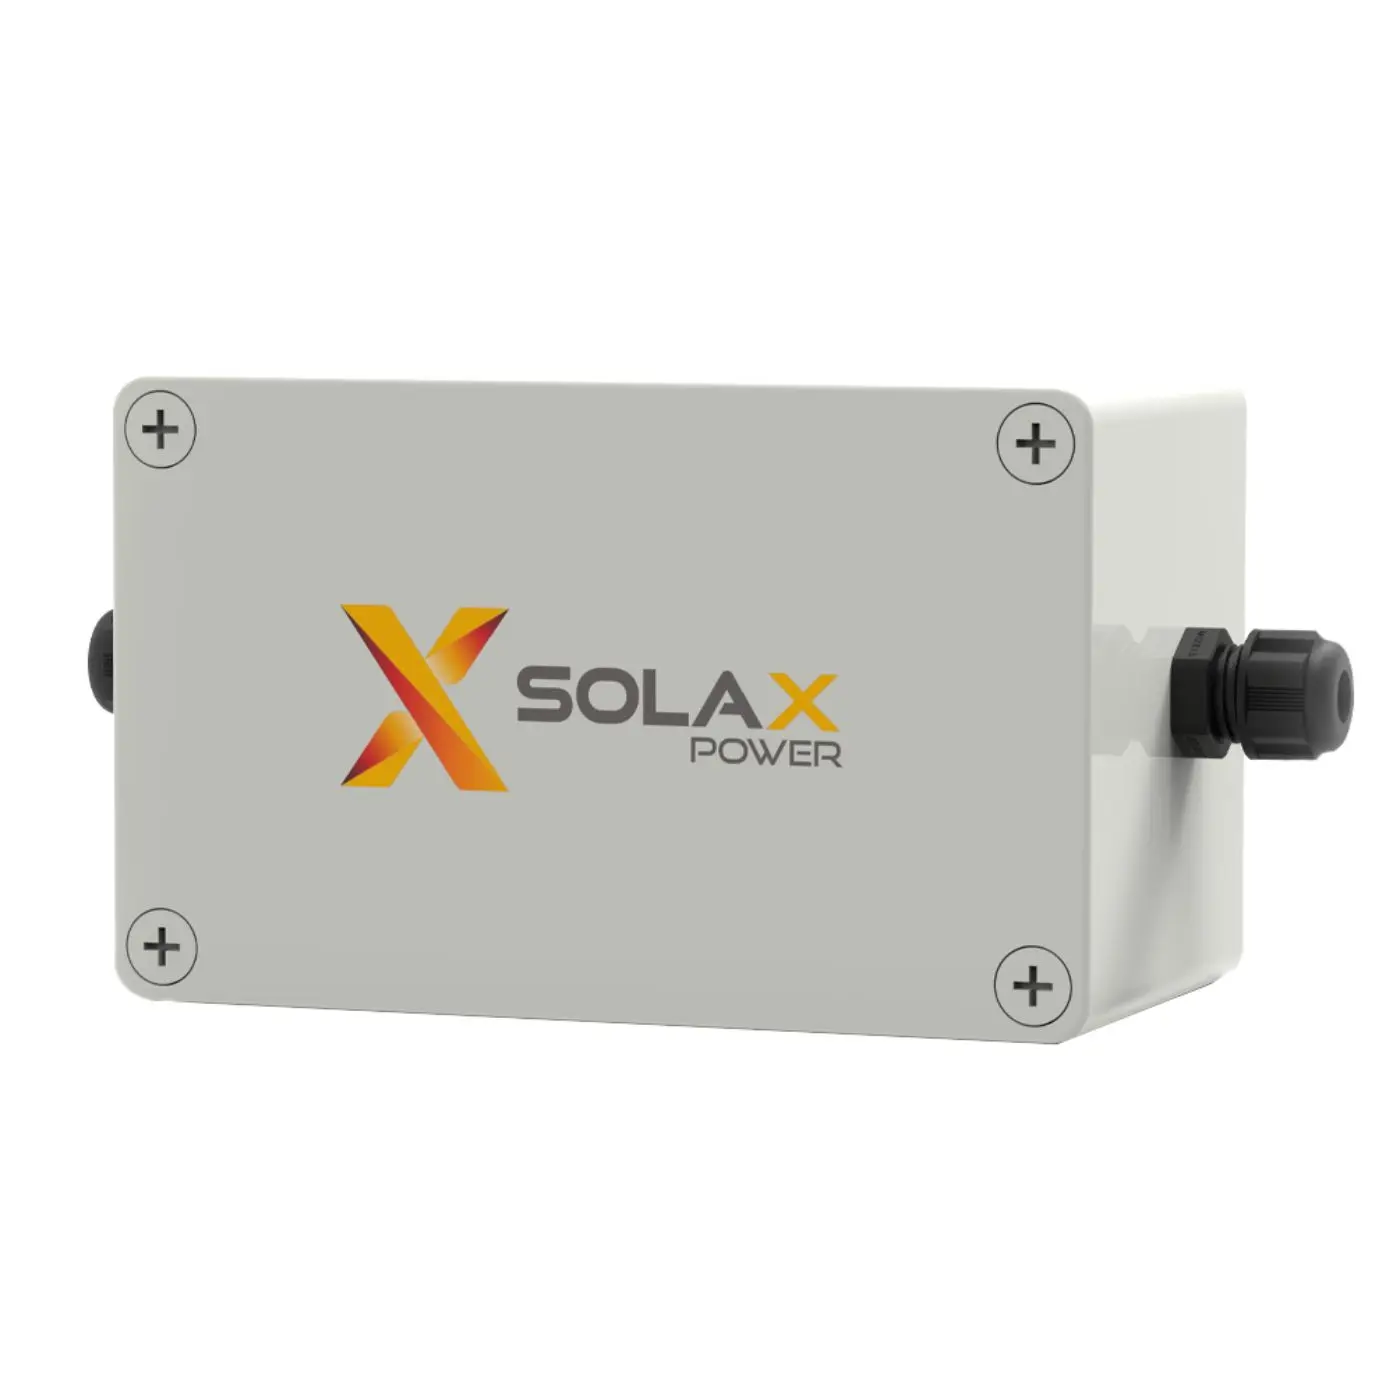 Solax adapter box